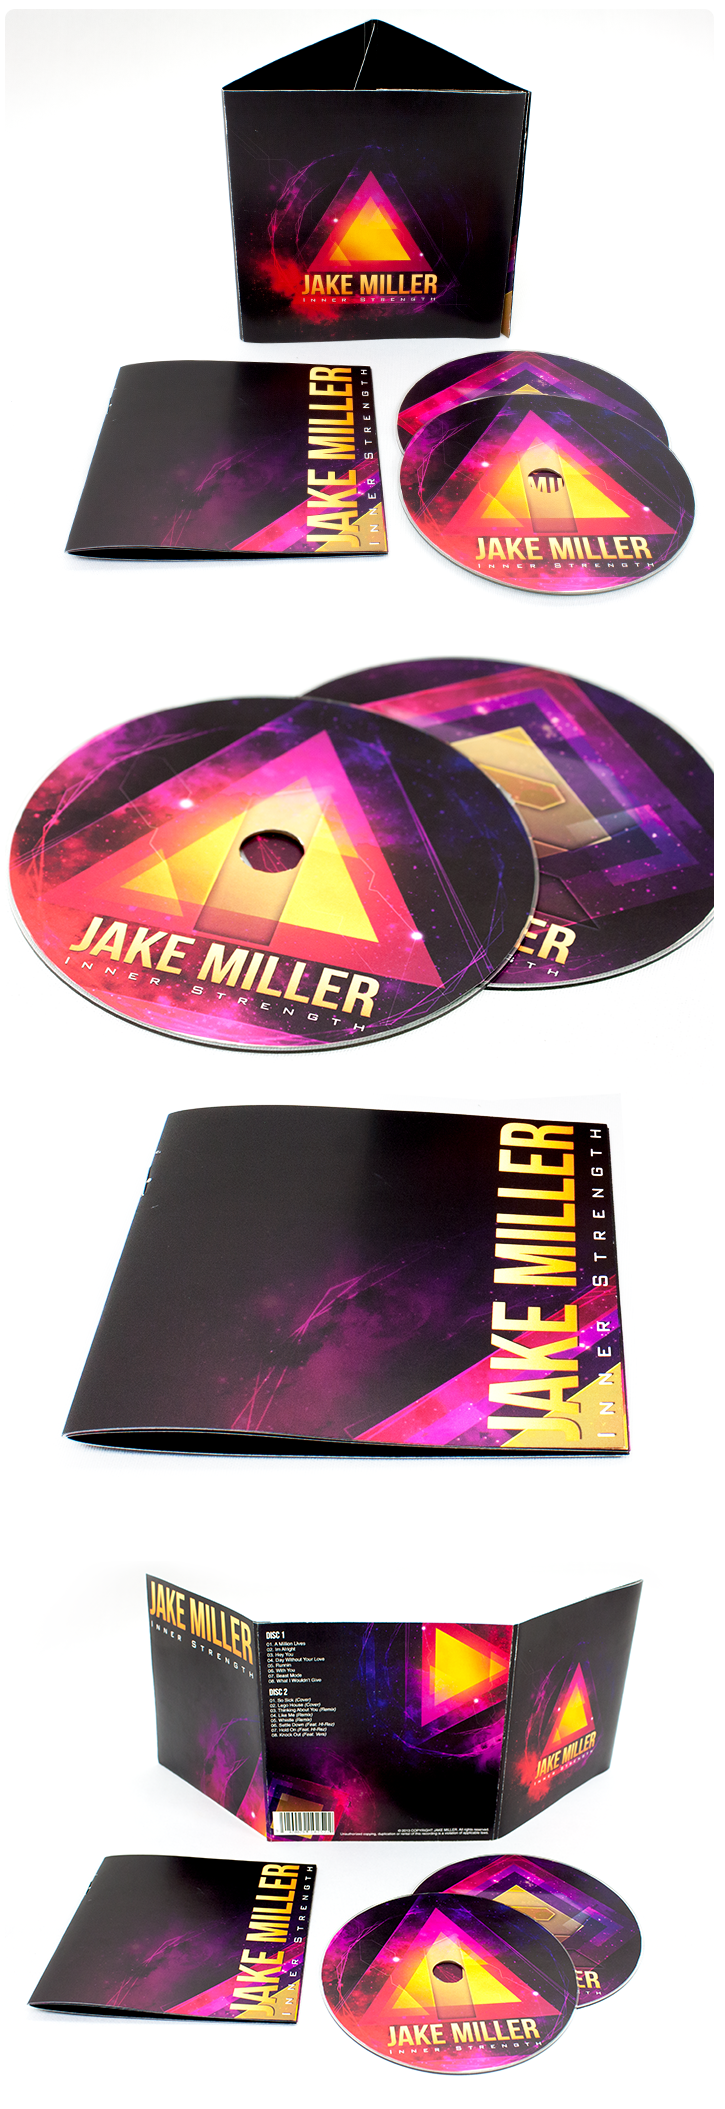 Jake Miller miller inner strength cd cover triagle Space  trippy